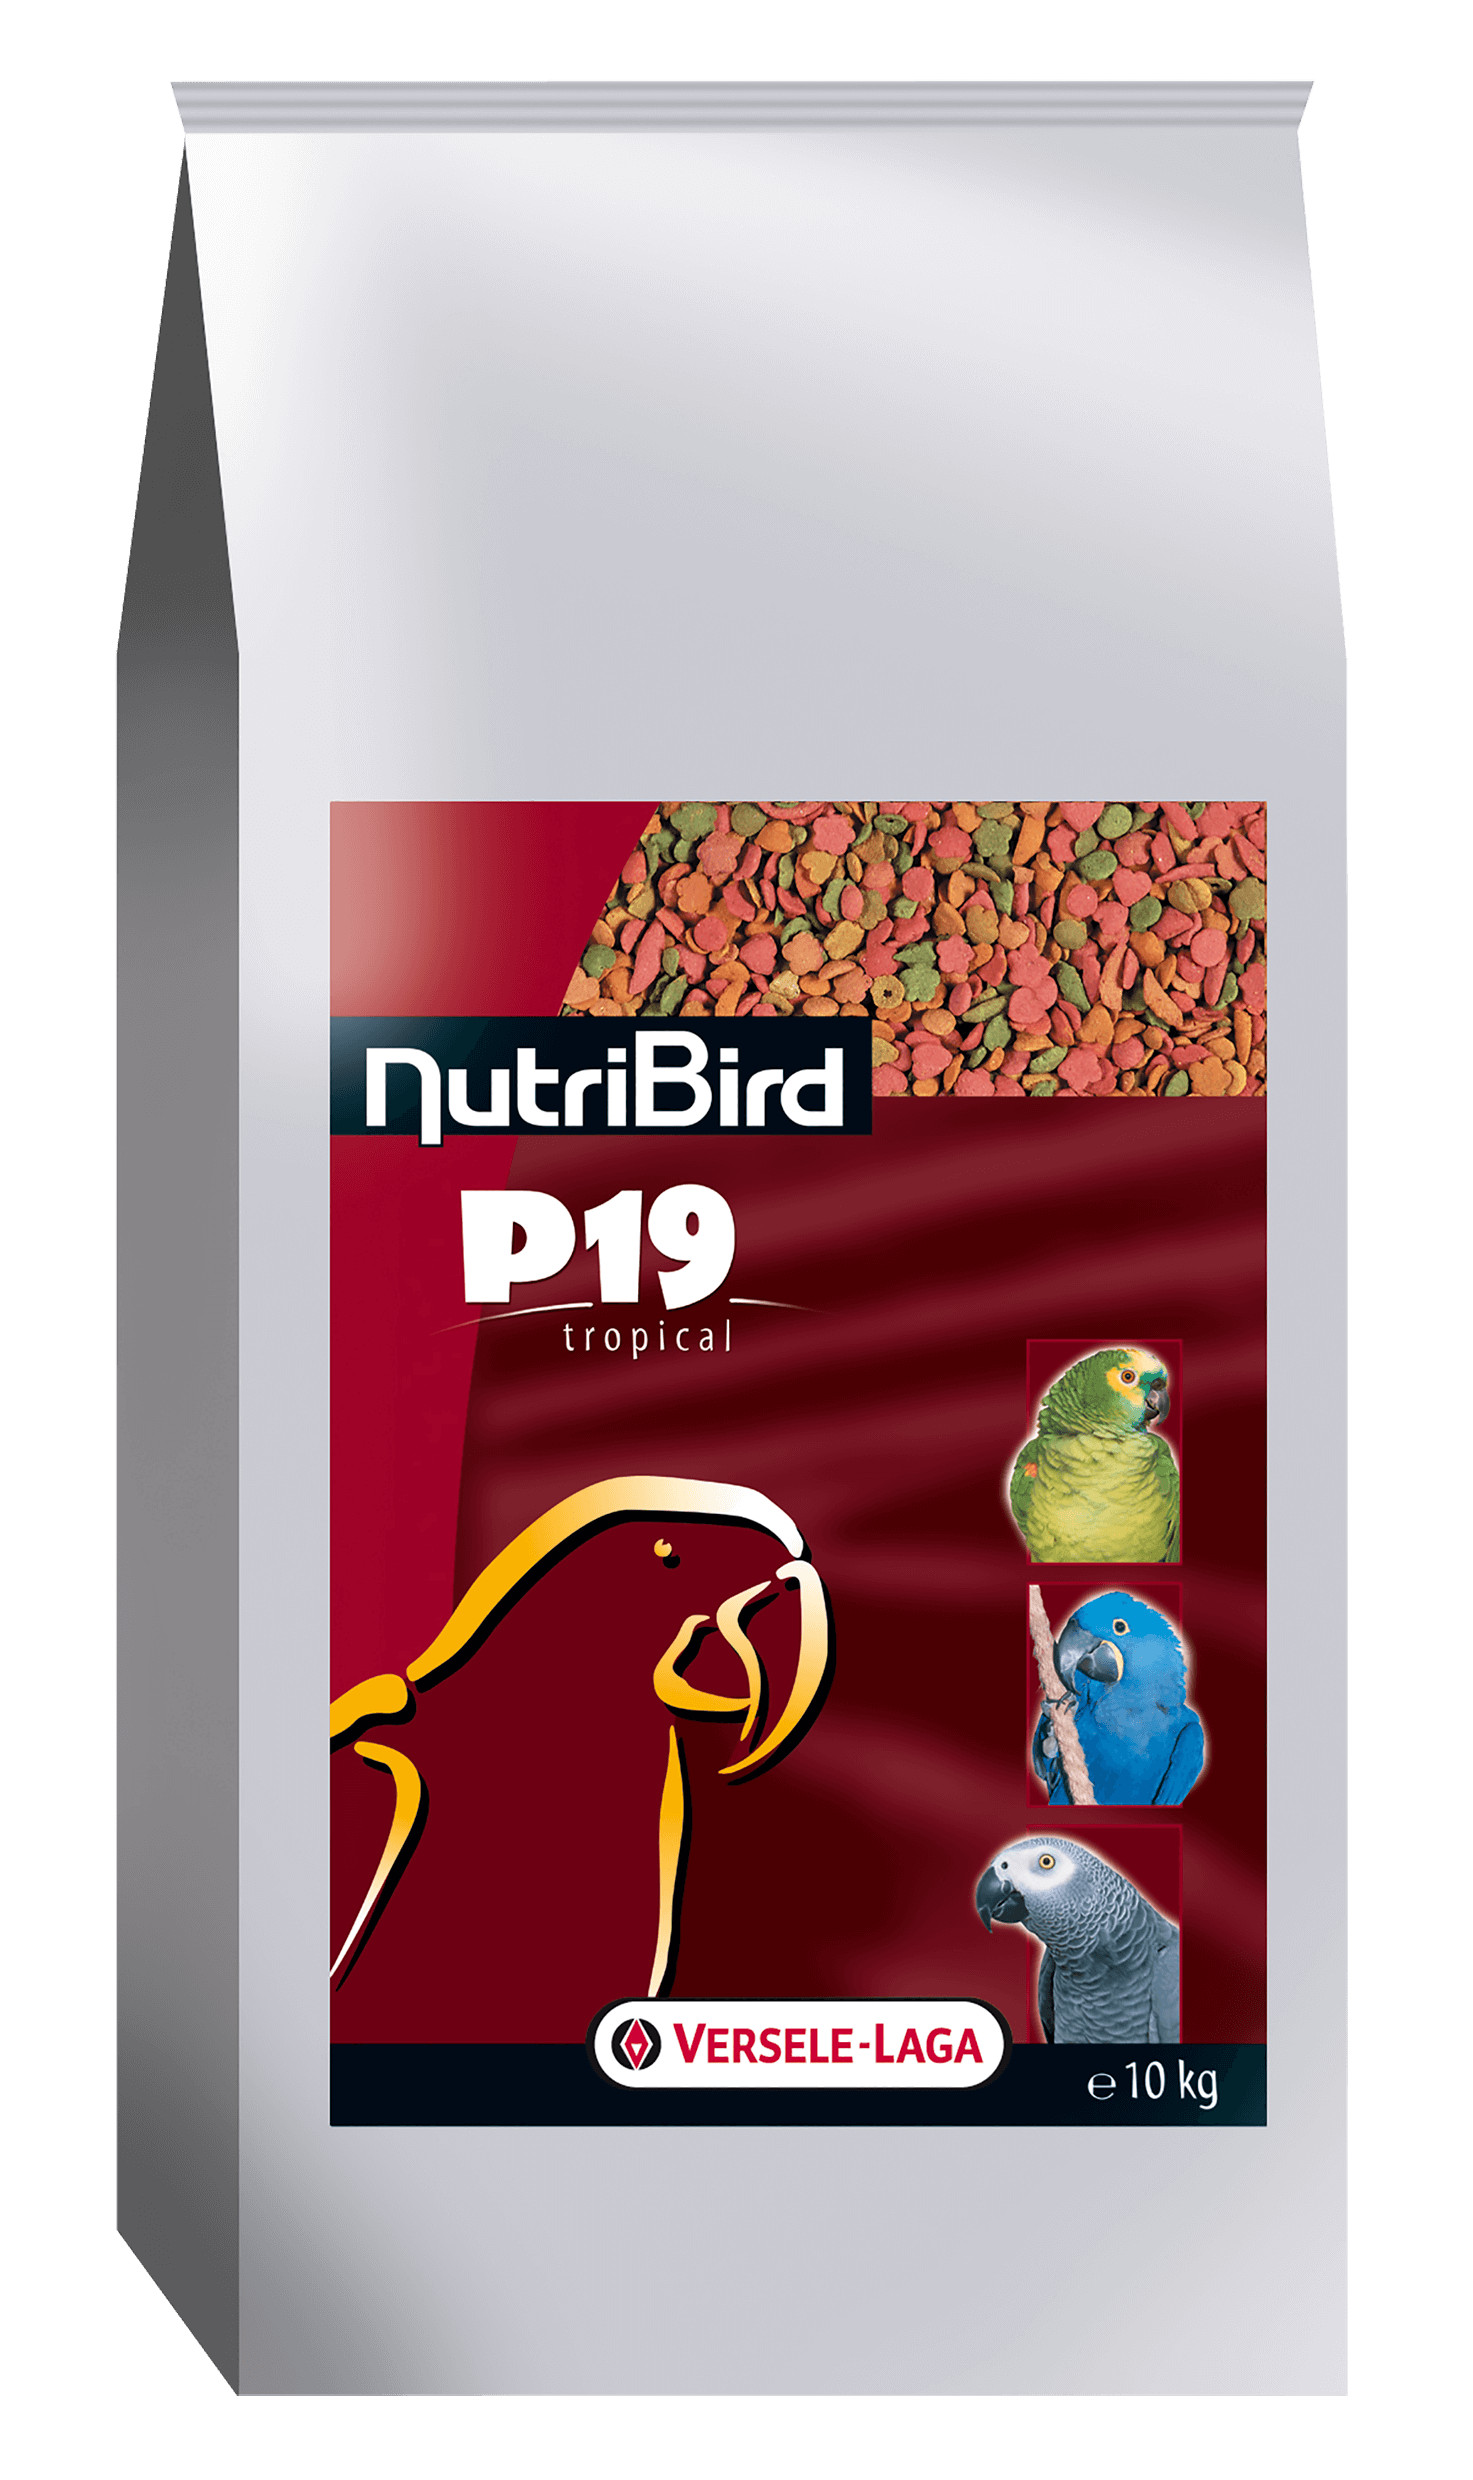 Nutribird P19 Tropical Papegaaien vogelvoer